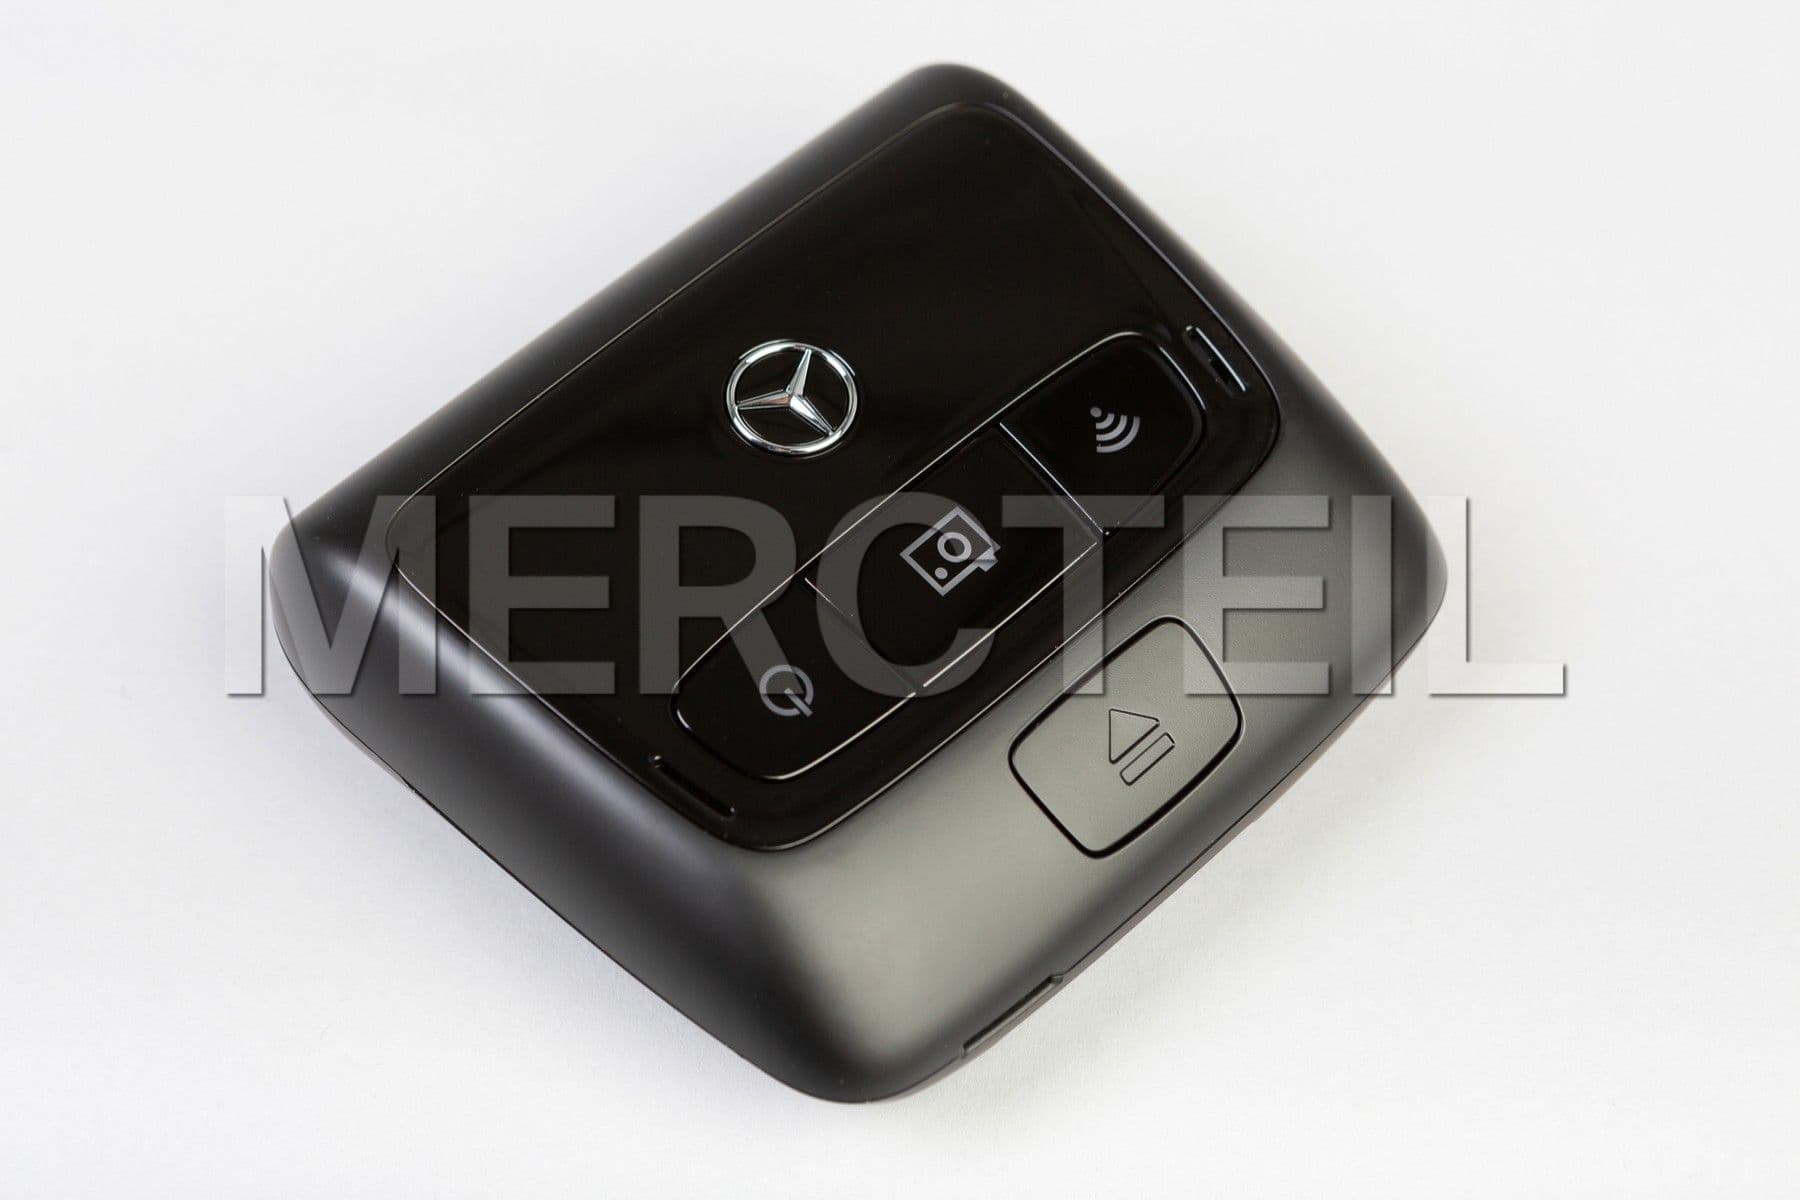 Front Camera Dashcam Genuine Mercedes Benz (part number: A2139055310)